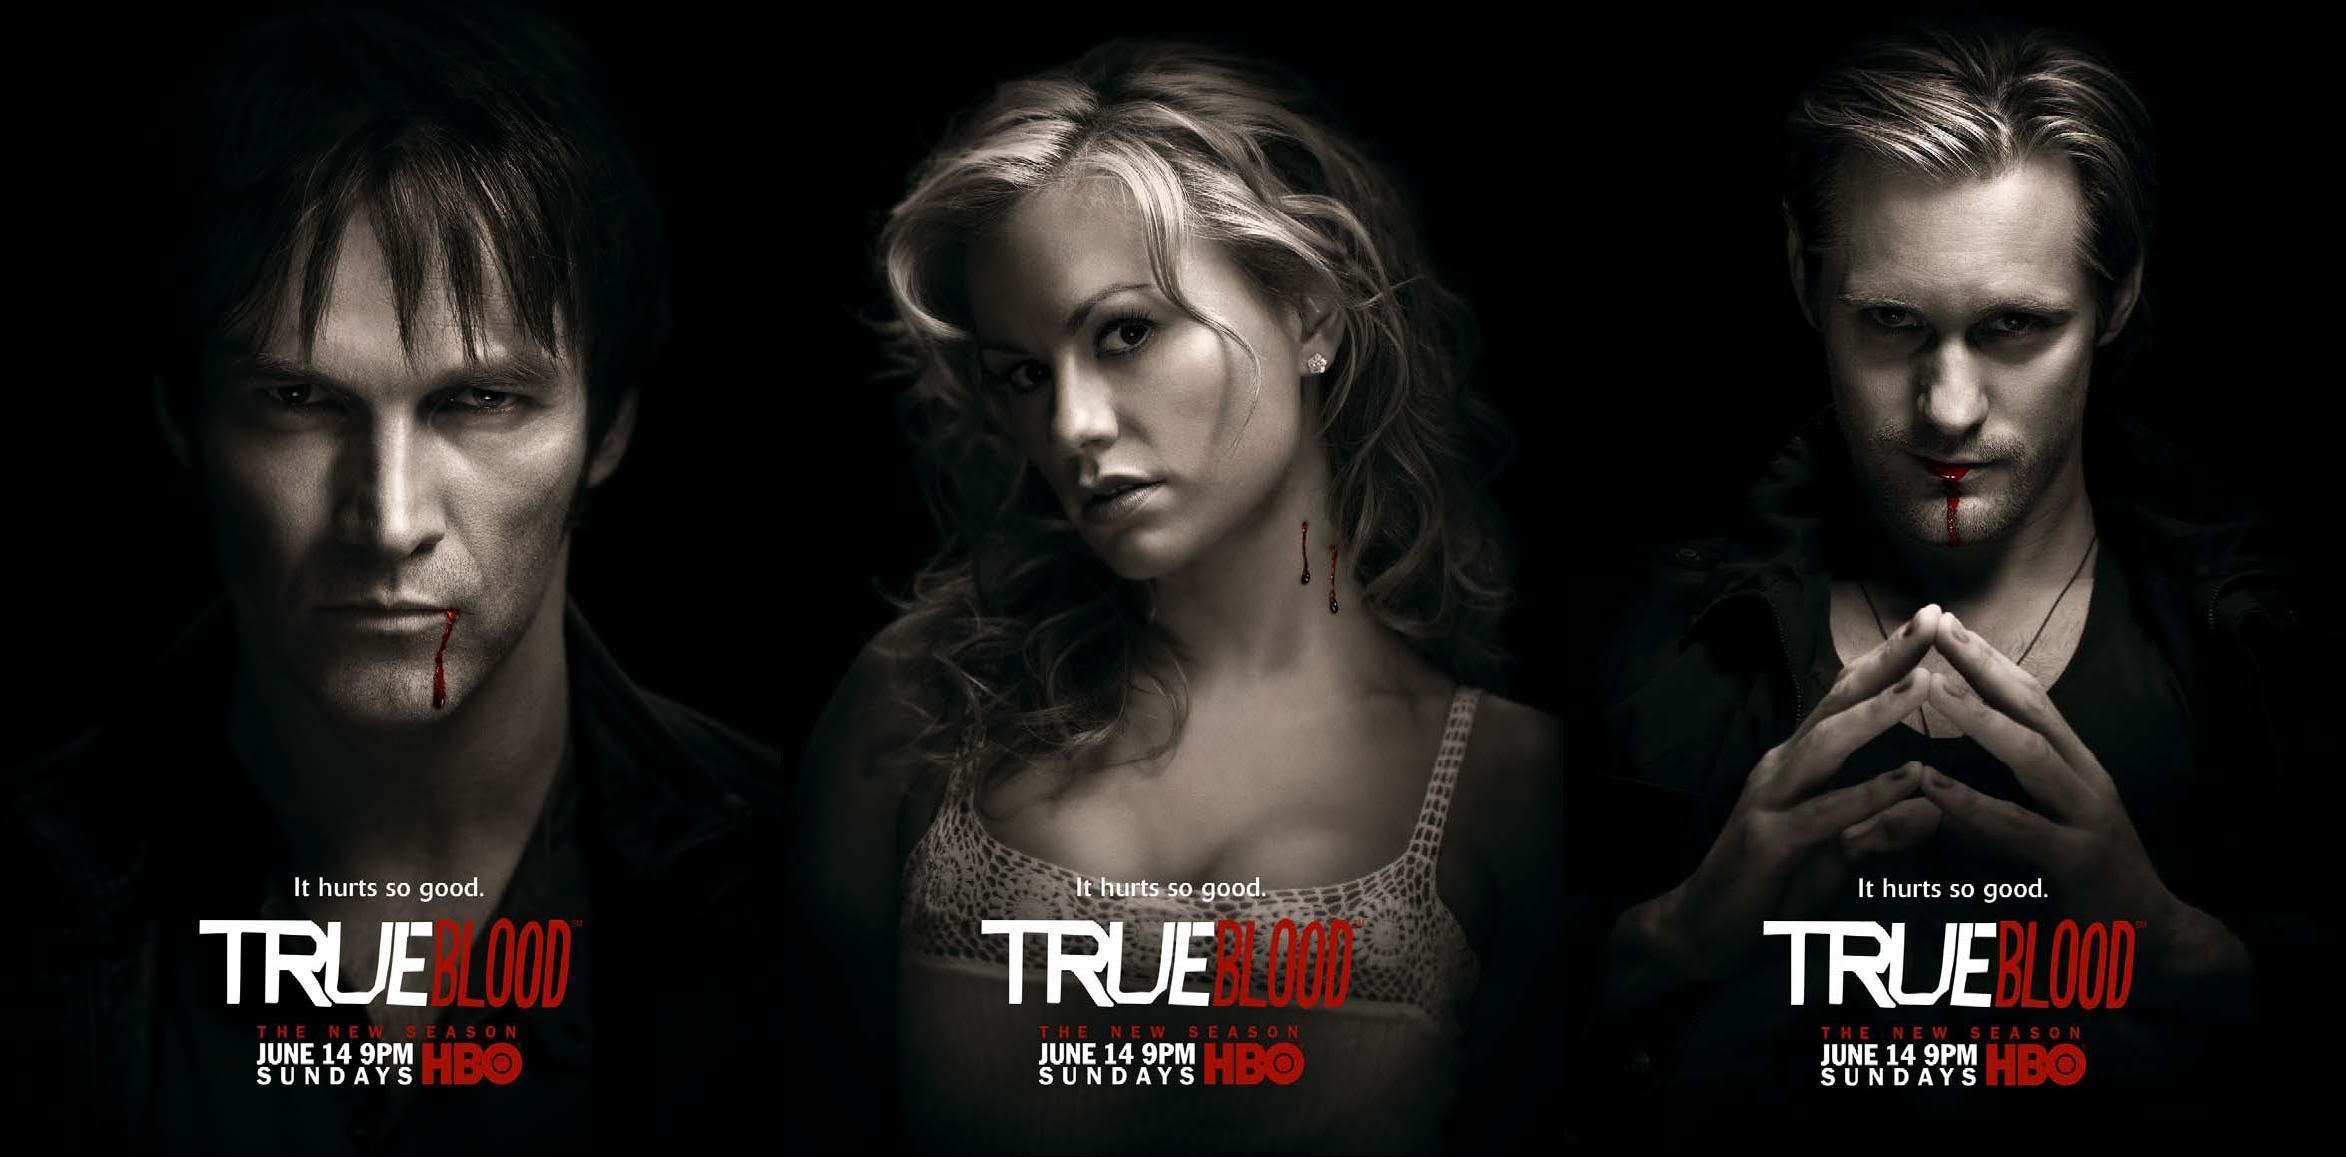 True Blood Wallpaper, Picture, Image